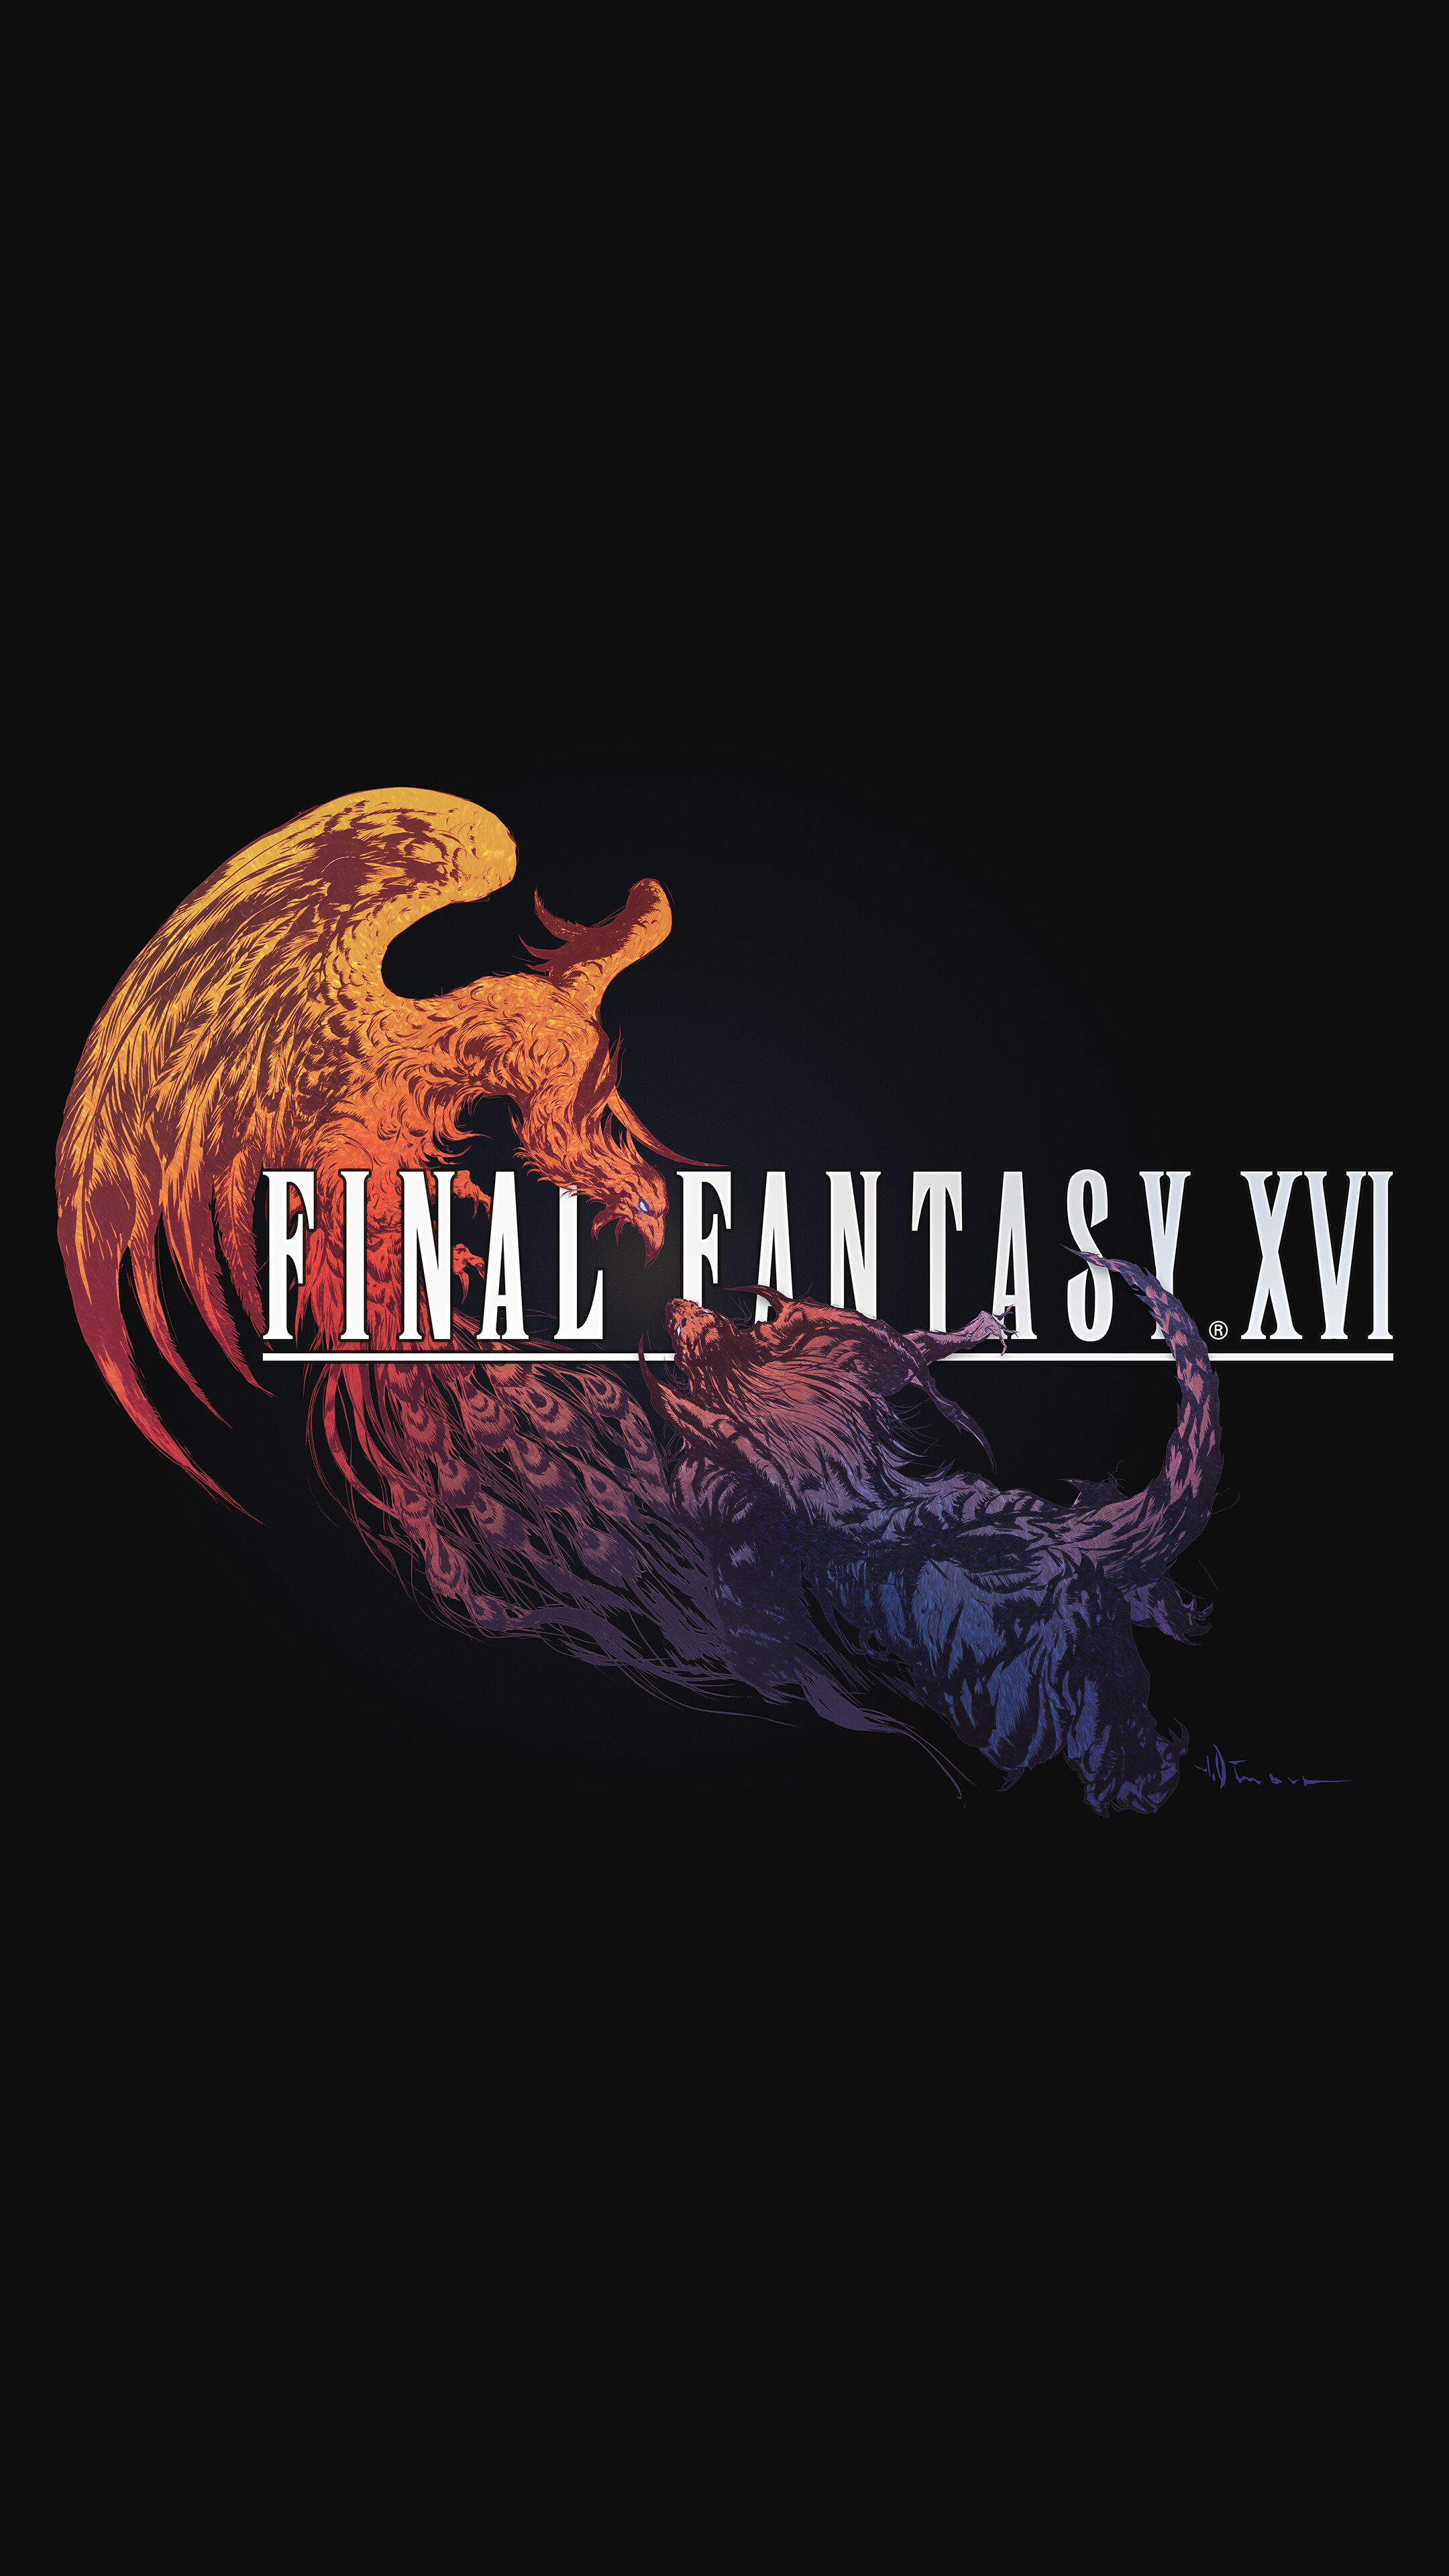 Final Fantasy Xvi Logo 4k Wallpaper